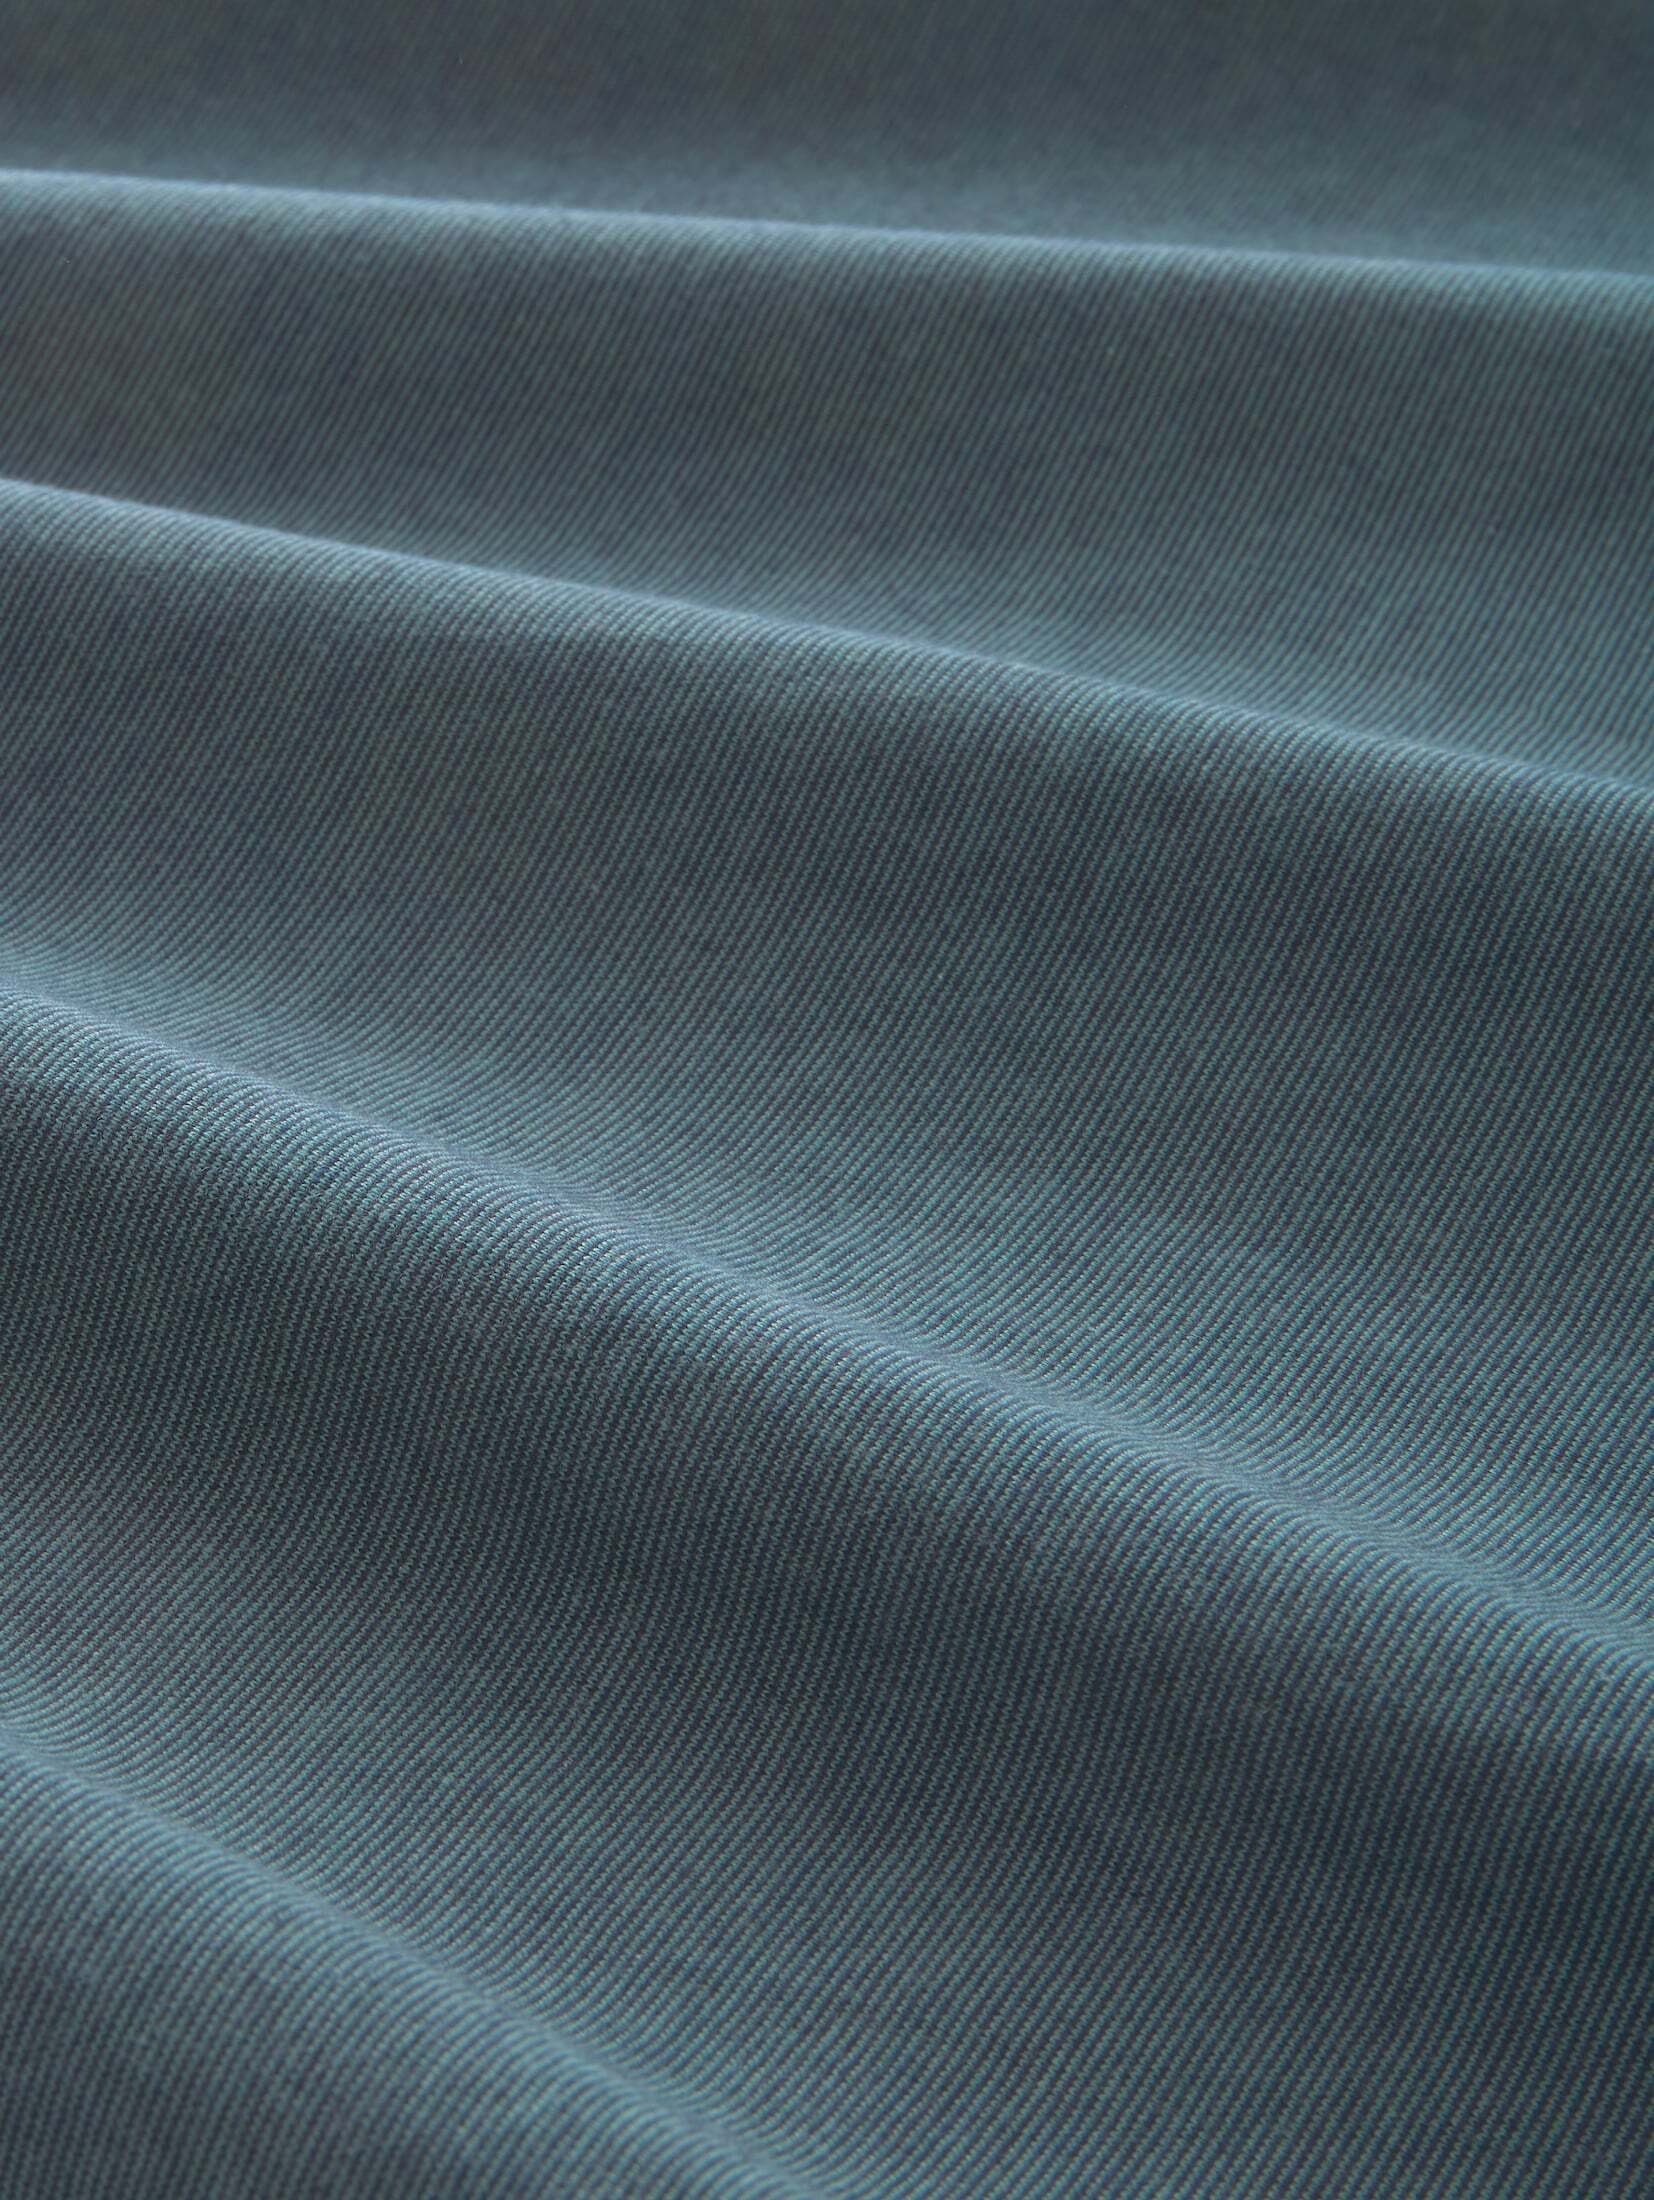 TAILOR Print TOM stripe T-Shirt deep fine bluish T-Shirt green mit